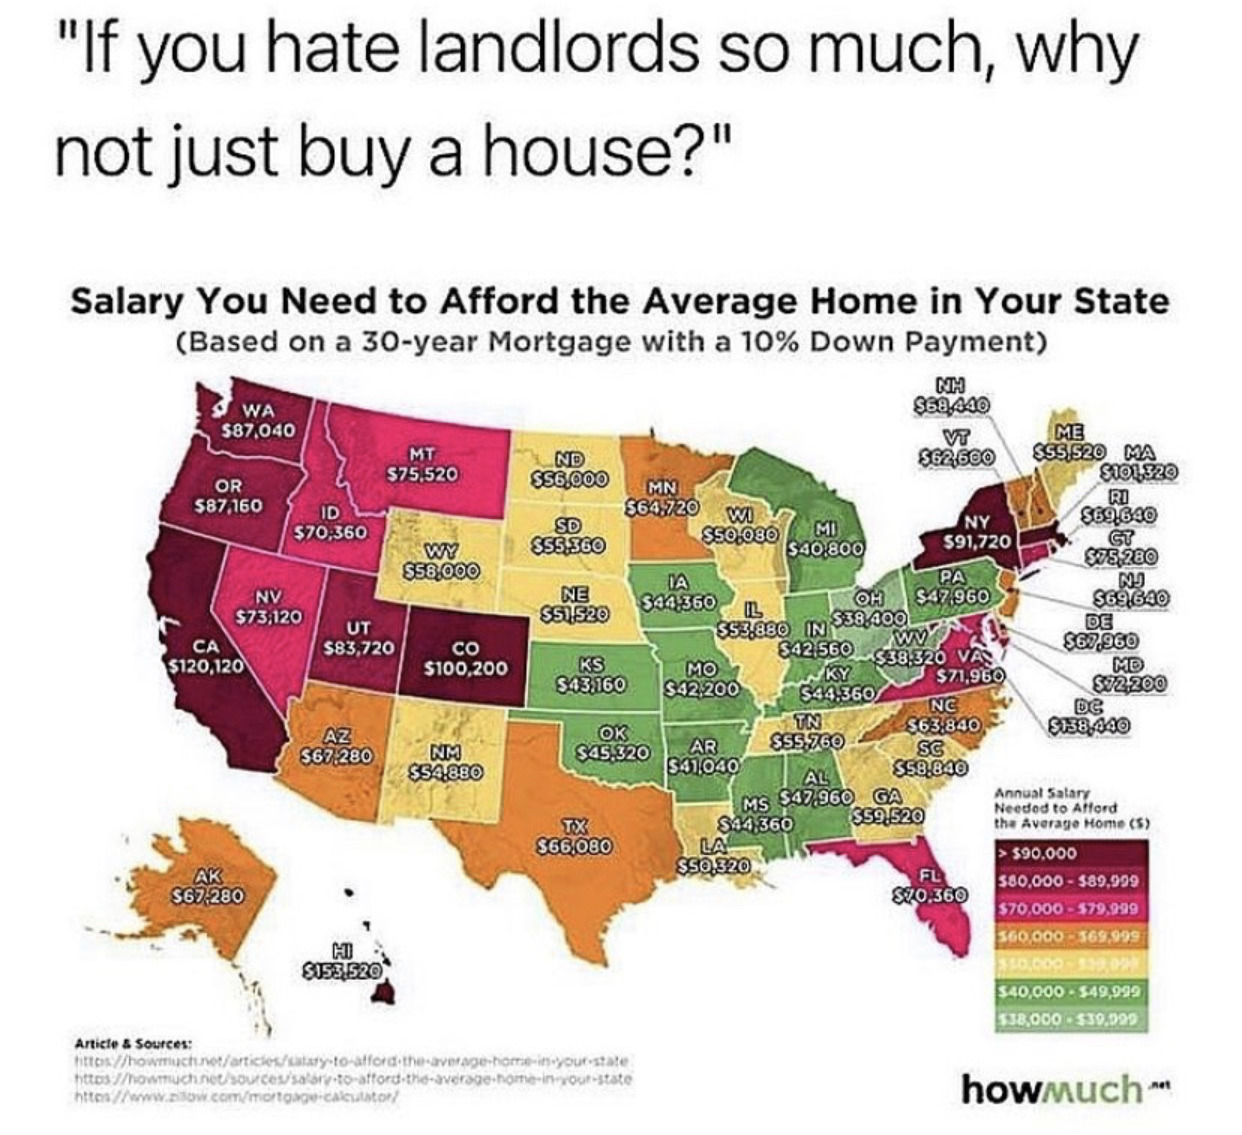 Pay state. Зарплаты в США по Штатам. Средняя зарплата в США по Штатам. Стоимость жилья карта США. Налог на недвижимость в США по Штатам.